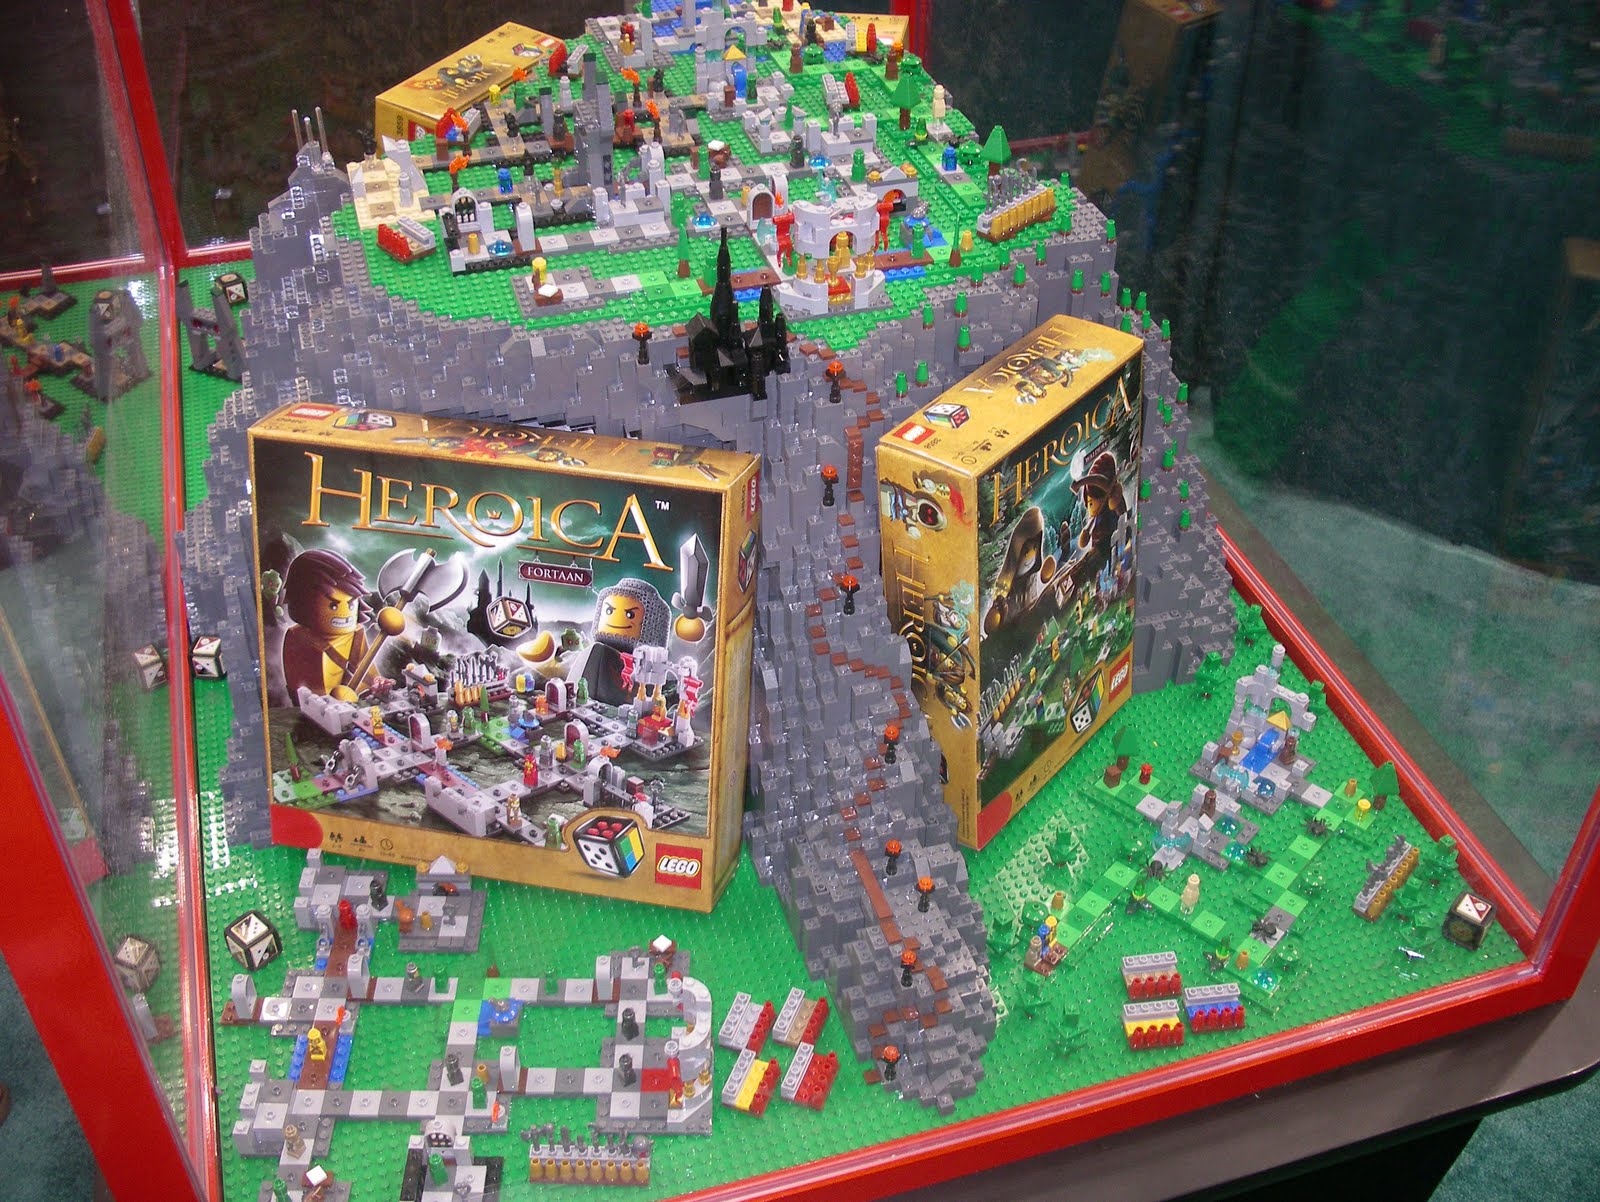 Lego Heroica Gameplay Video